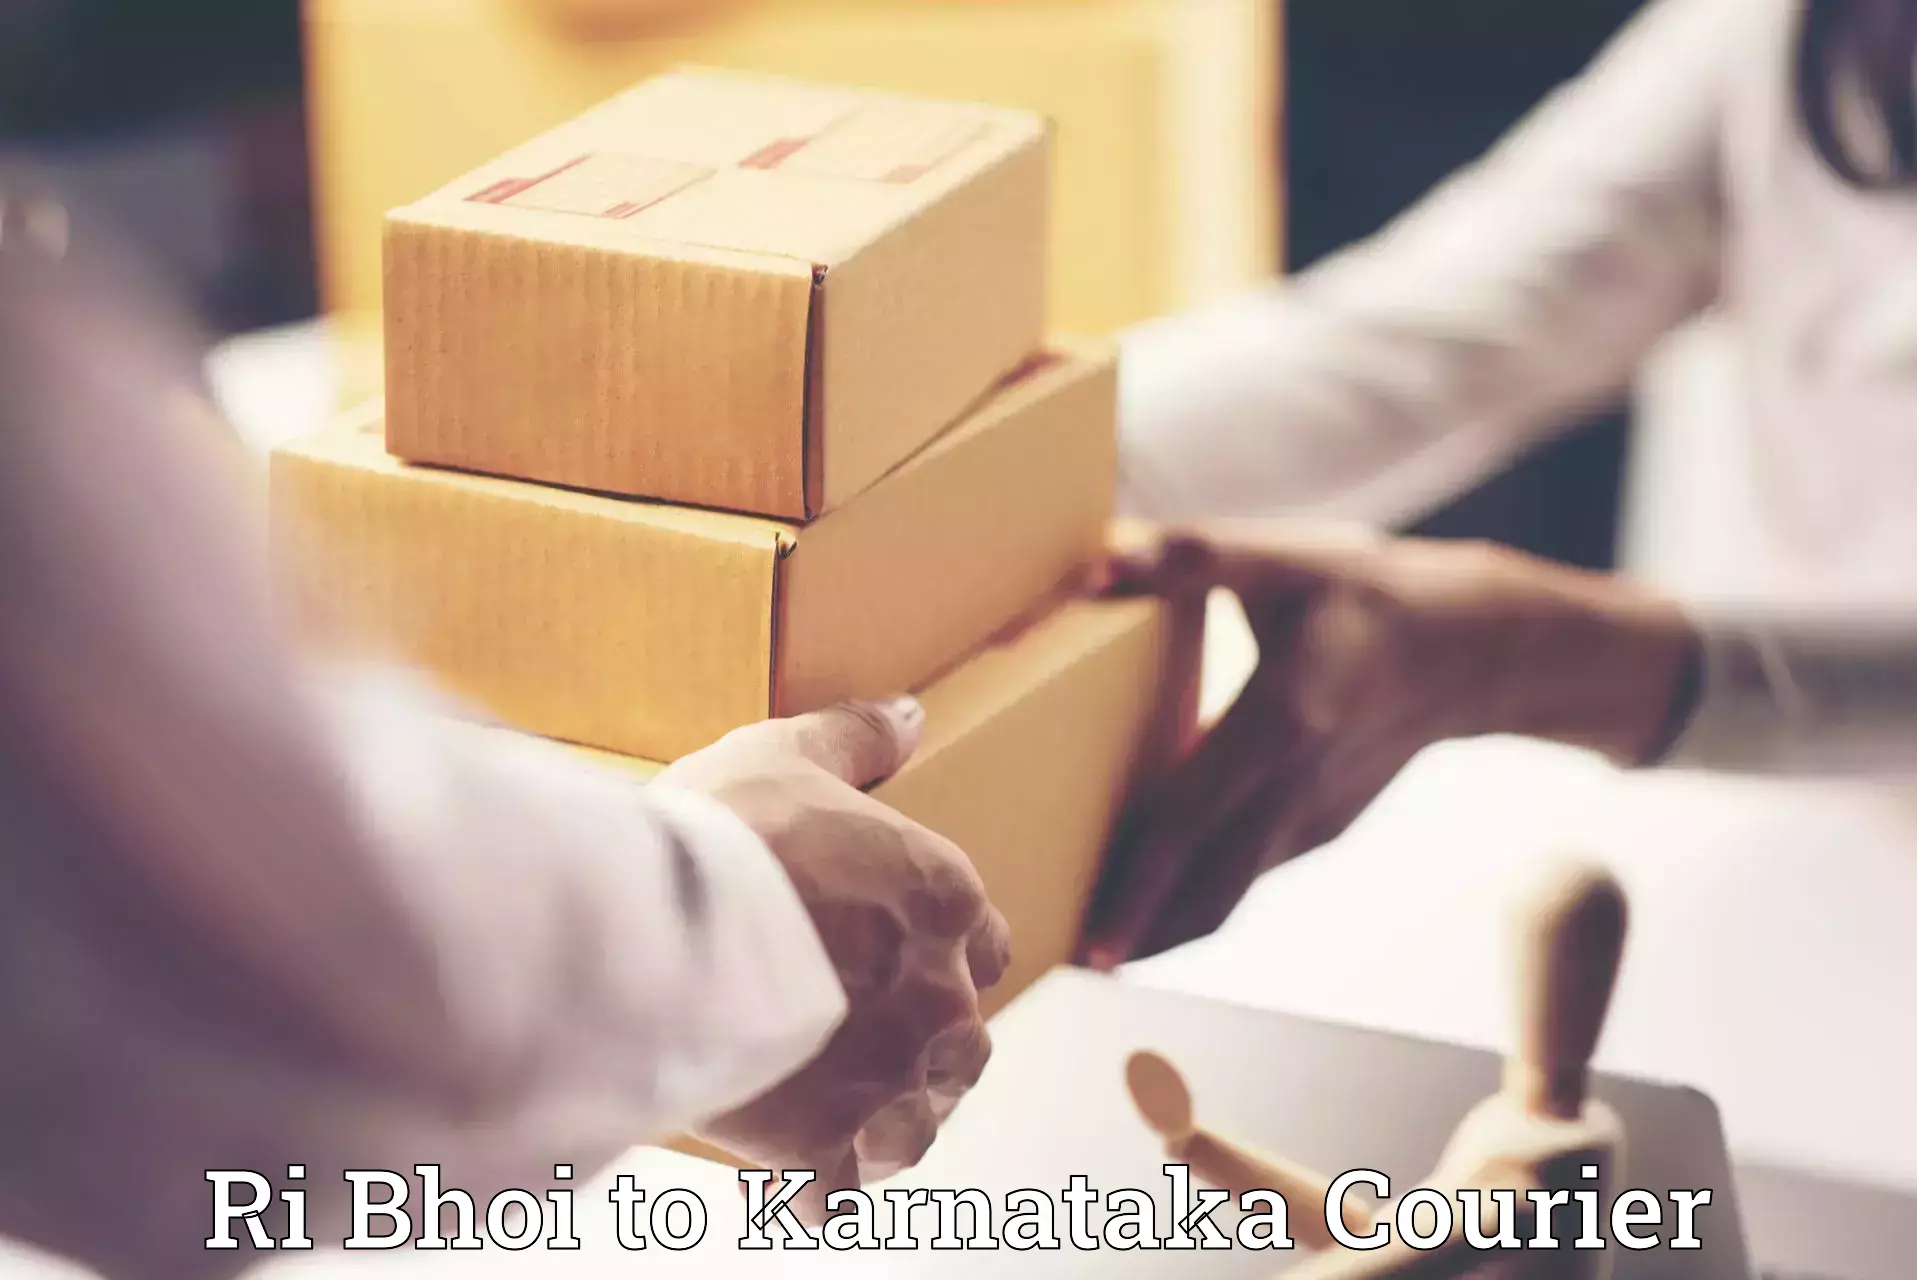 Expert goods movers Ri Bhoi to Karnataka